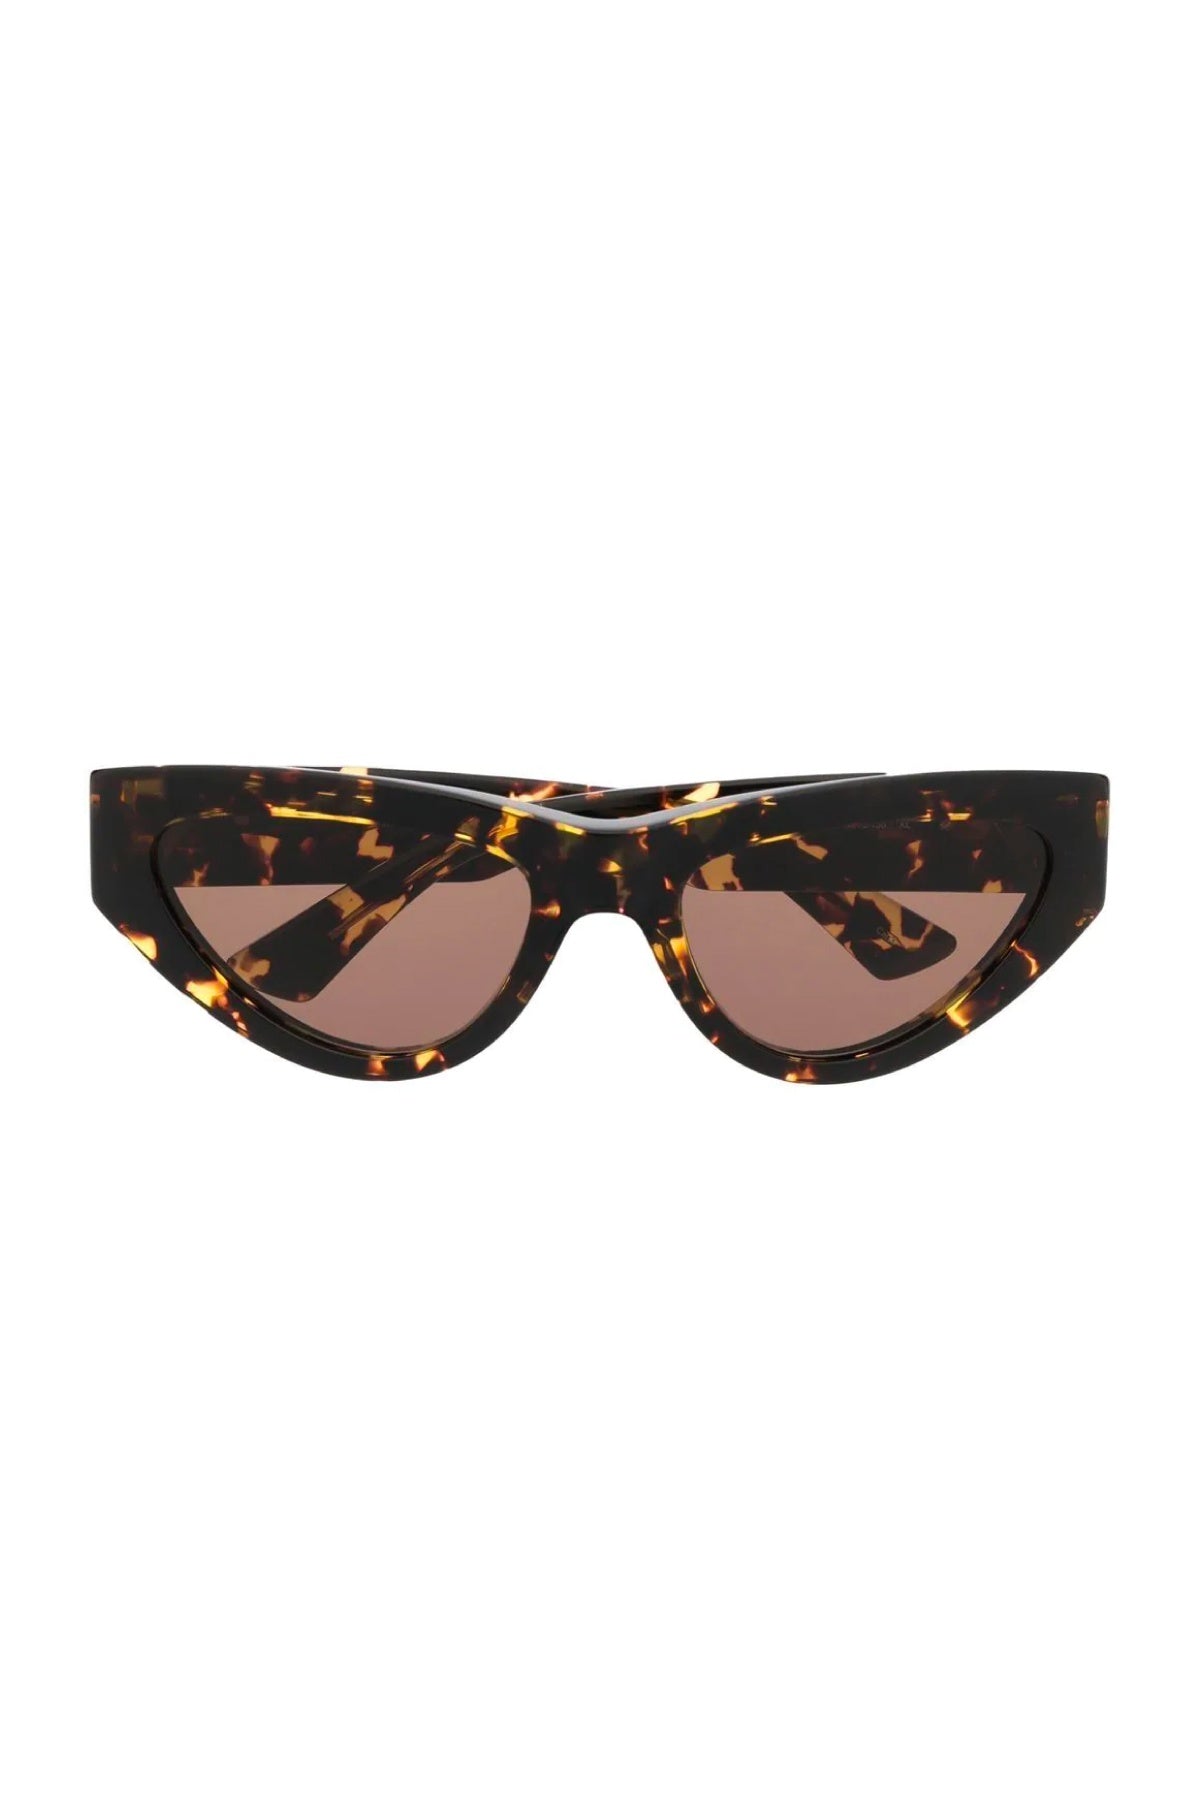 Bottega Veneta Cat-Eye Frame Sunglasses - Havana